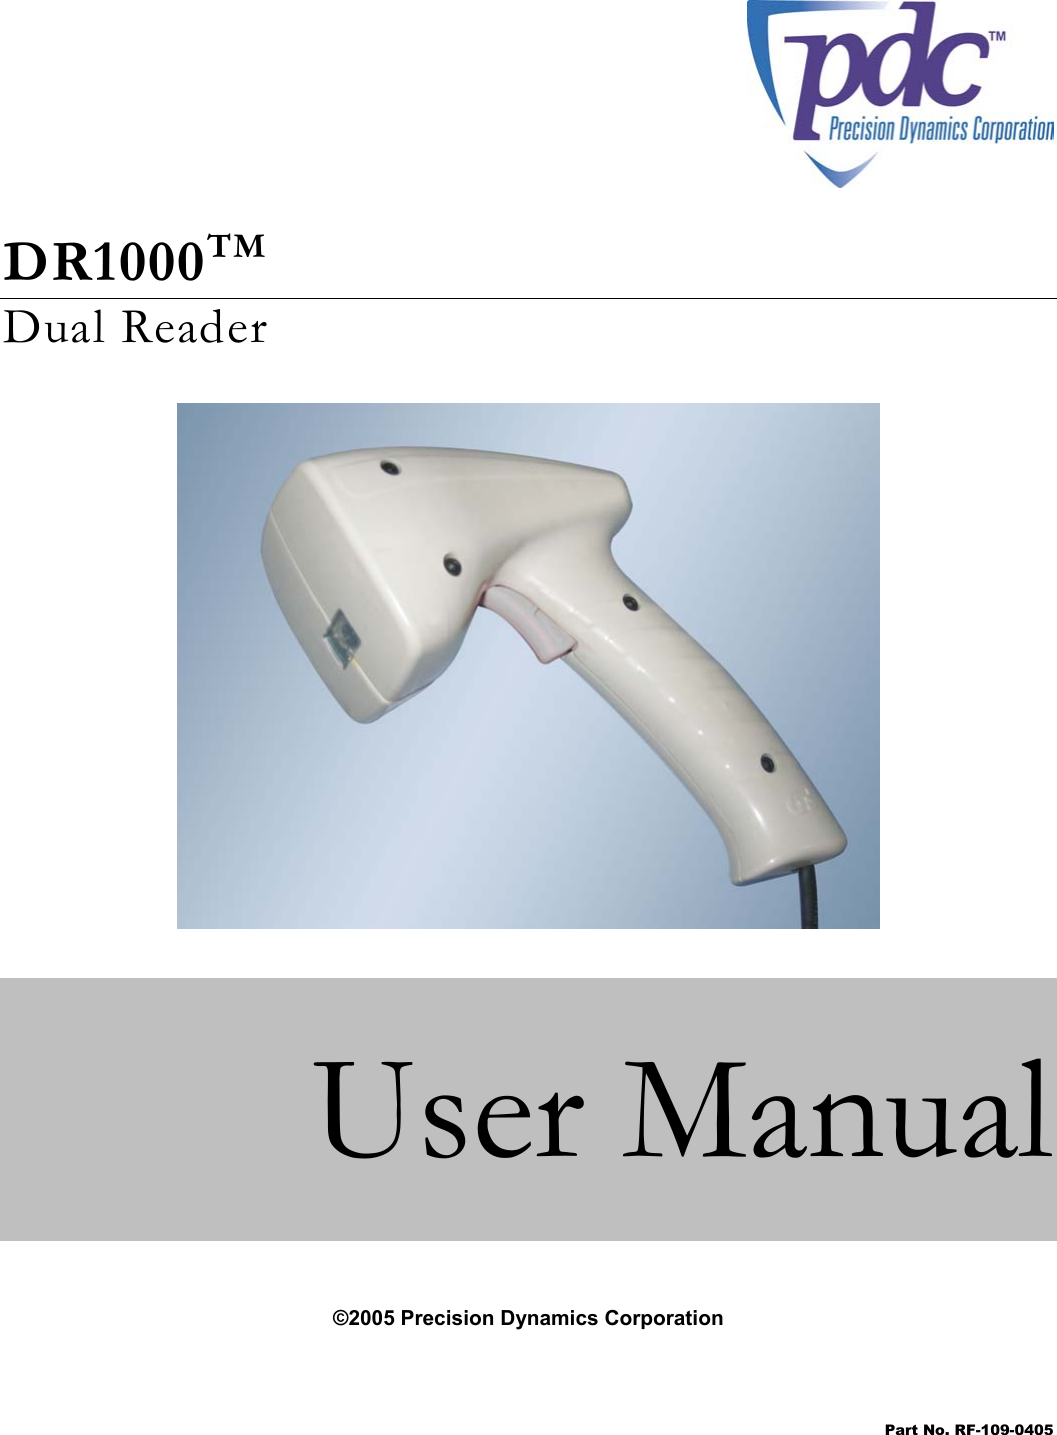   Part No. RF-109-0405          DR1000TM  Dual Reader                 User Manual    ©2005 Precision Dynamics Corporation  